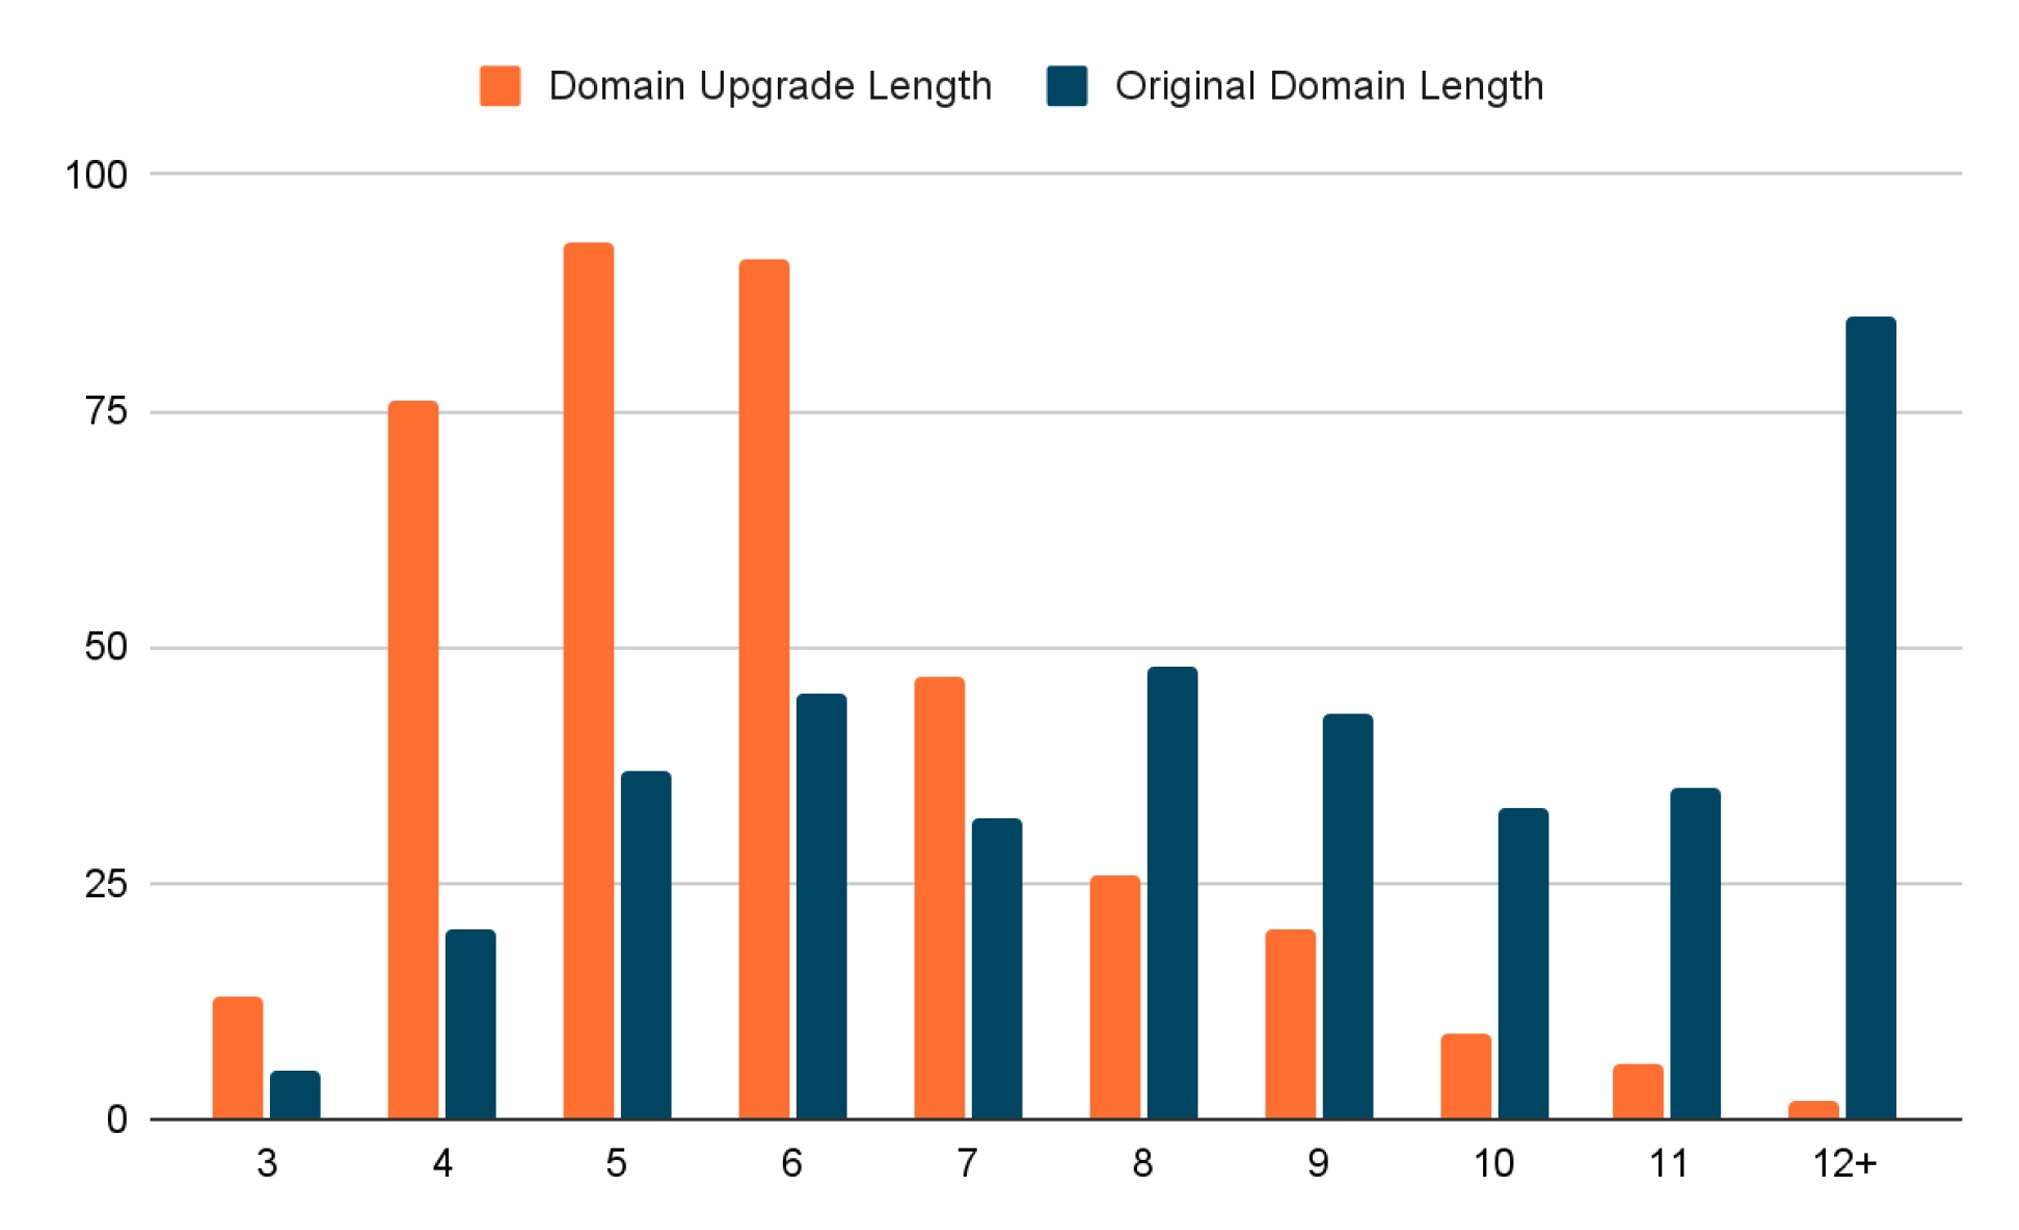 Domain Upgrade Length